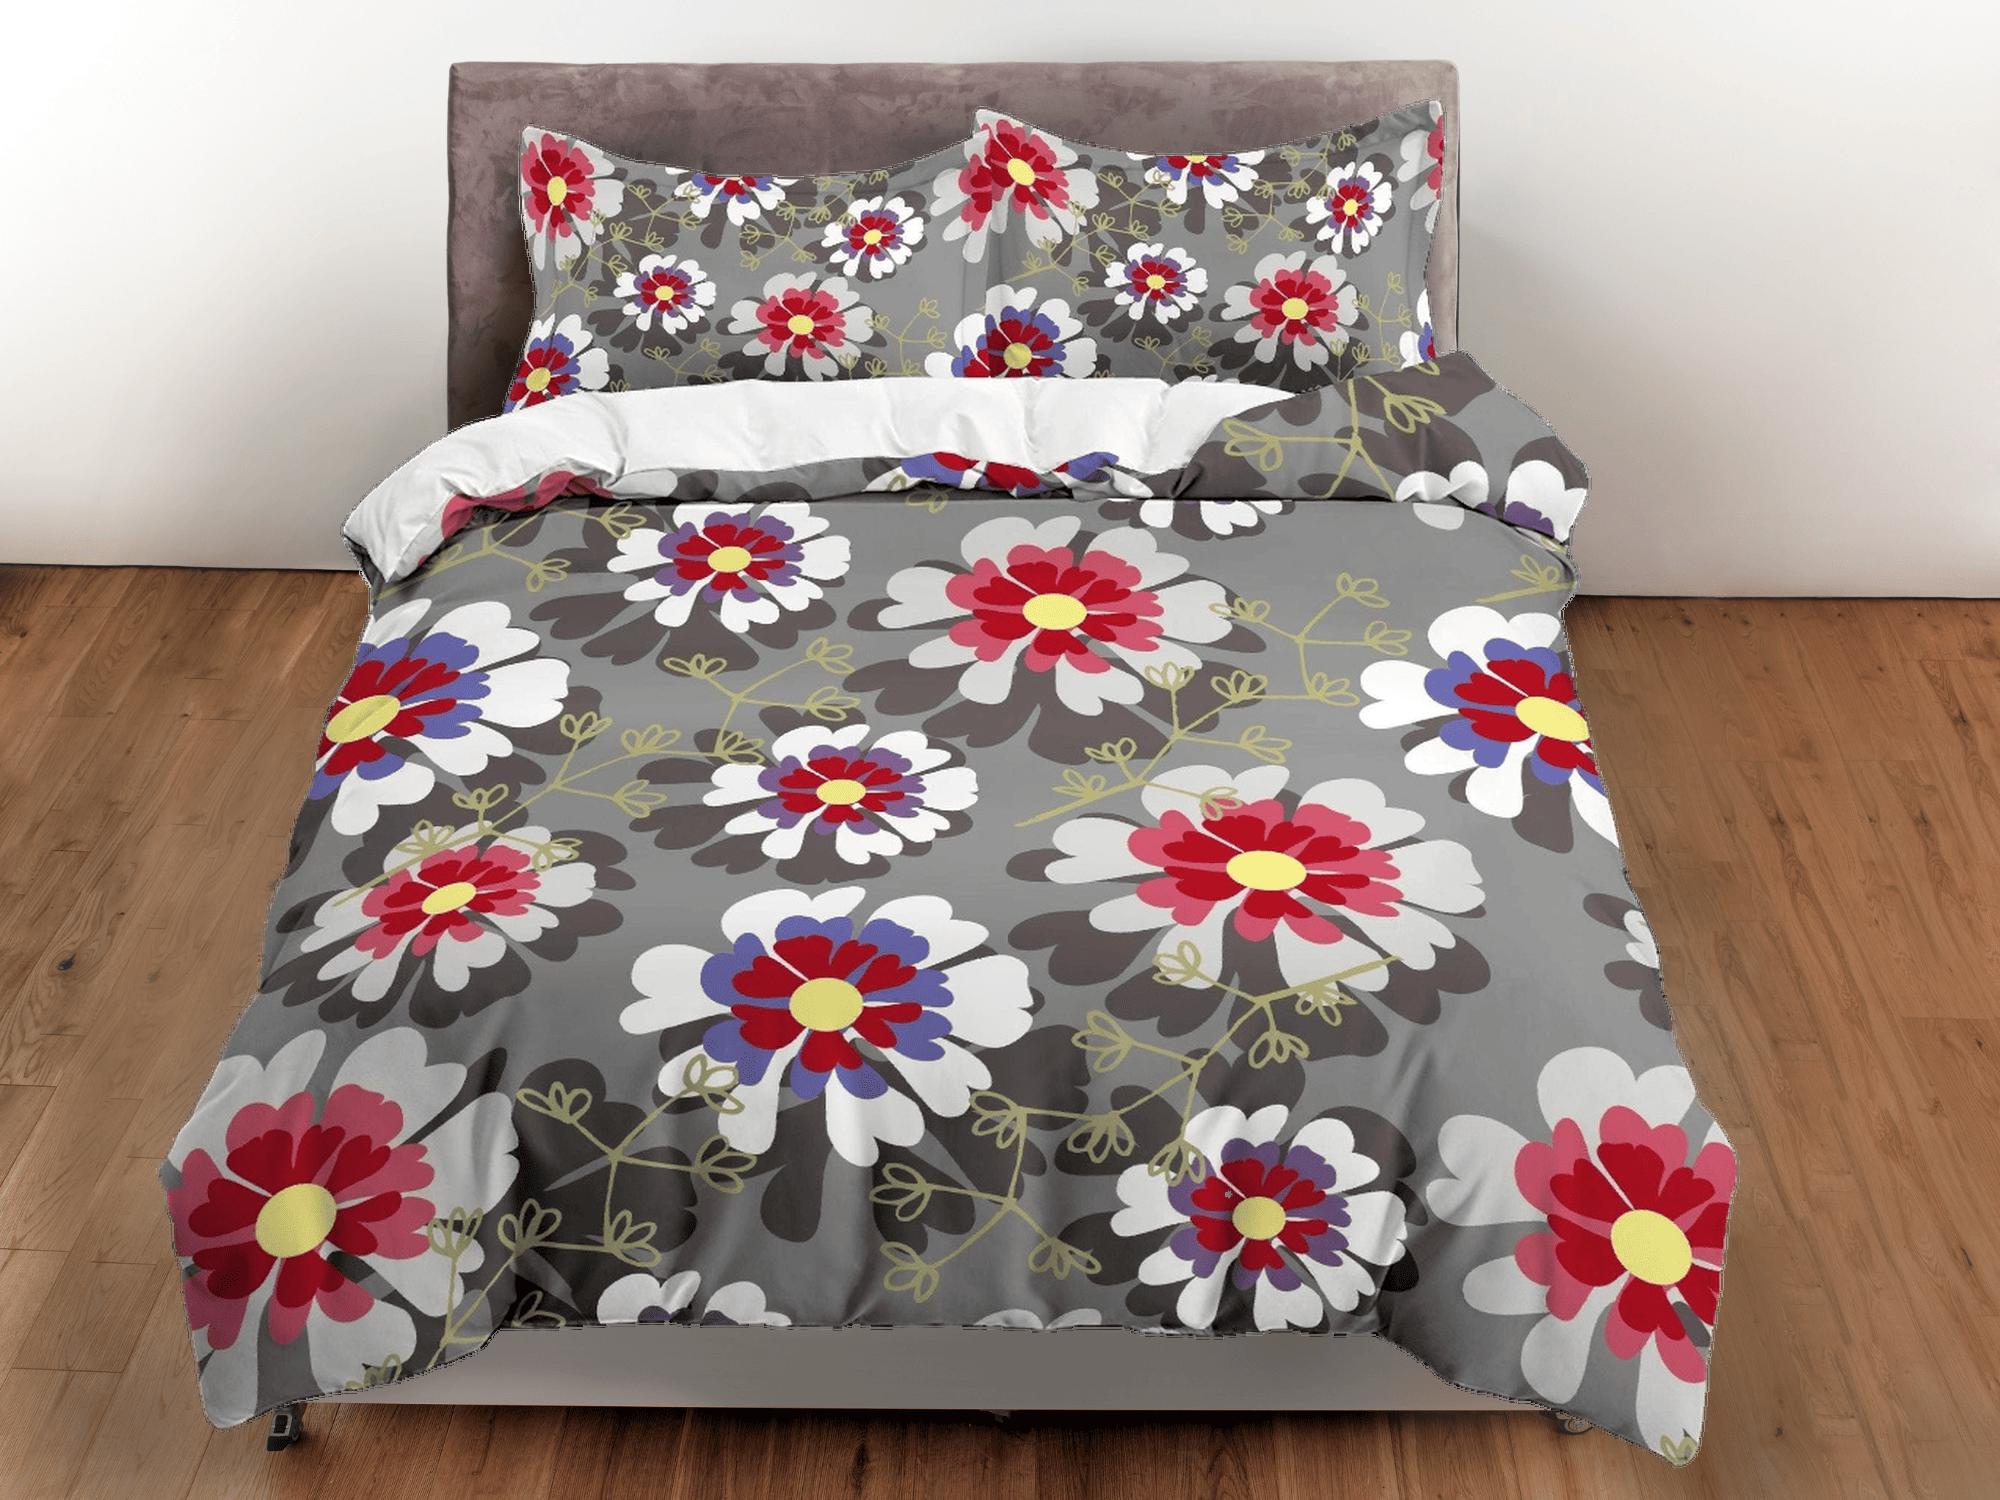 daintyduvet Collarette dahlia floral duvet cover colorful bedding, teen girl bedroom, baby girl crib bedding boho maximalist bedspread aesthetic bedding